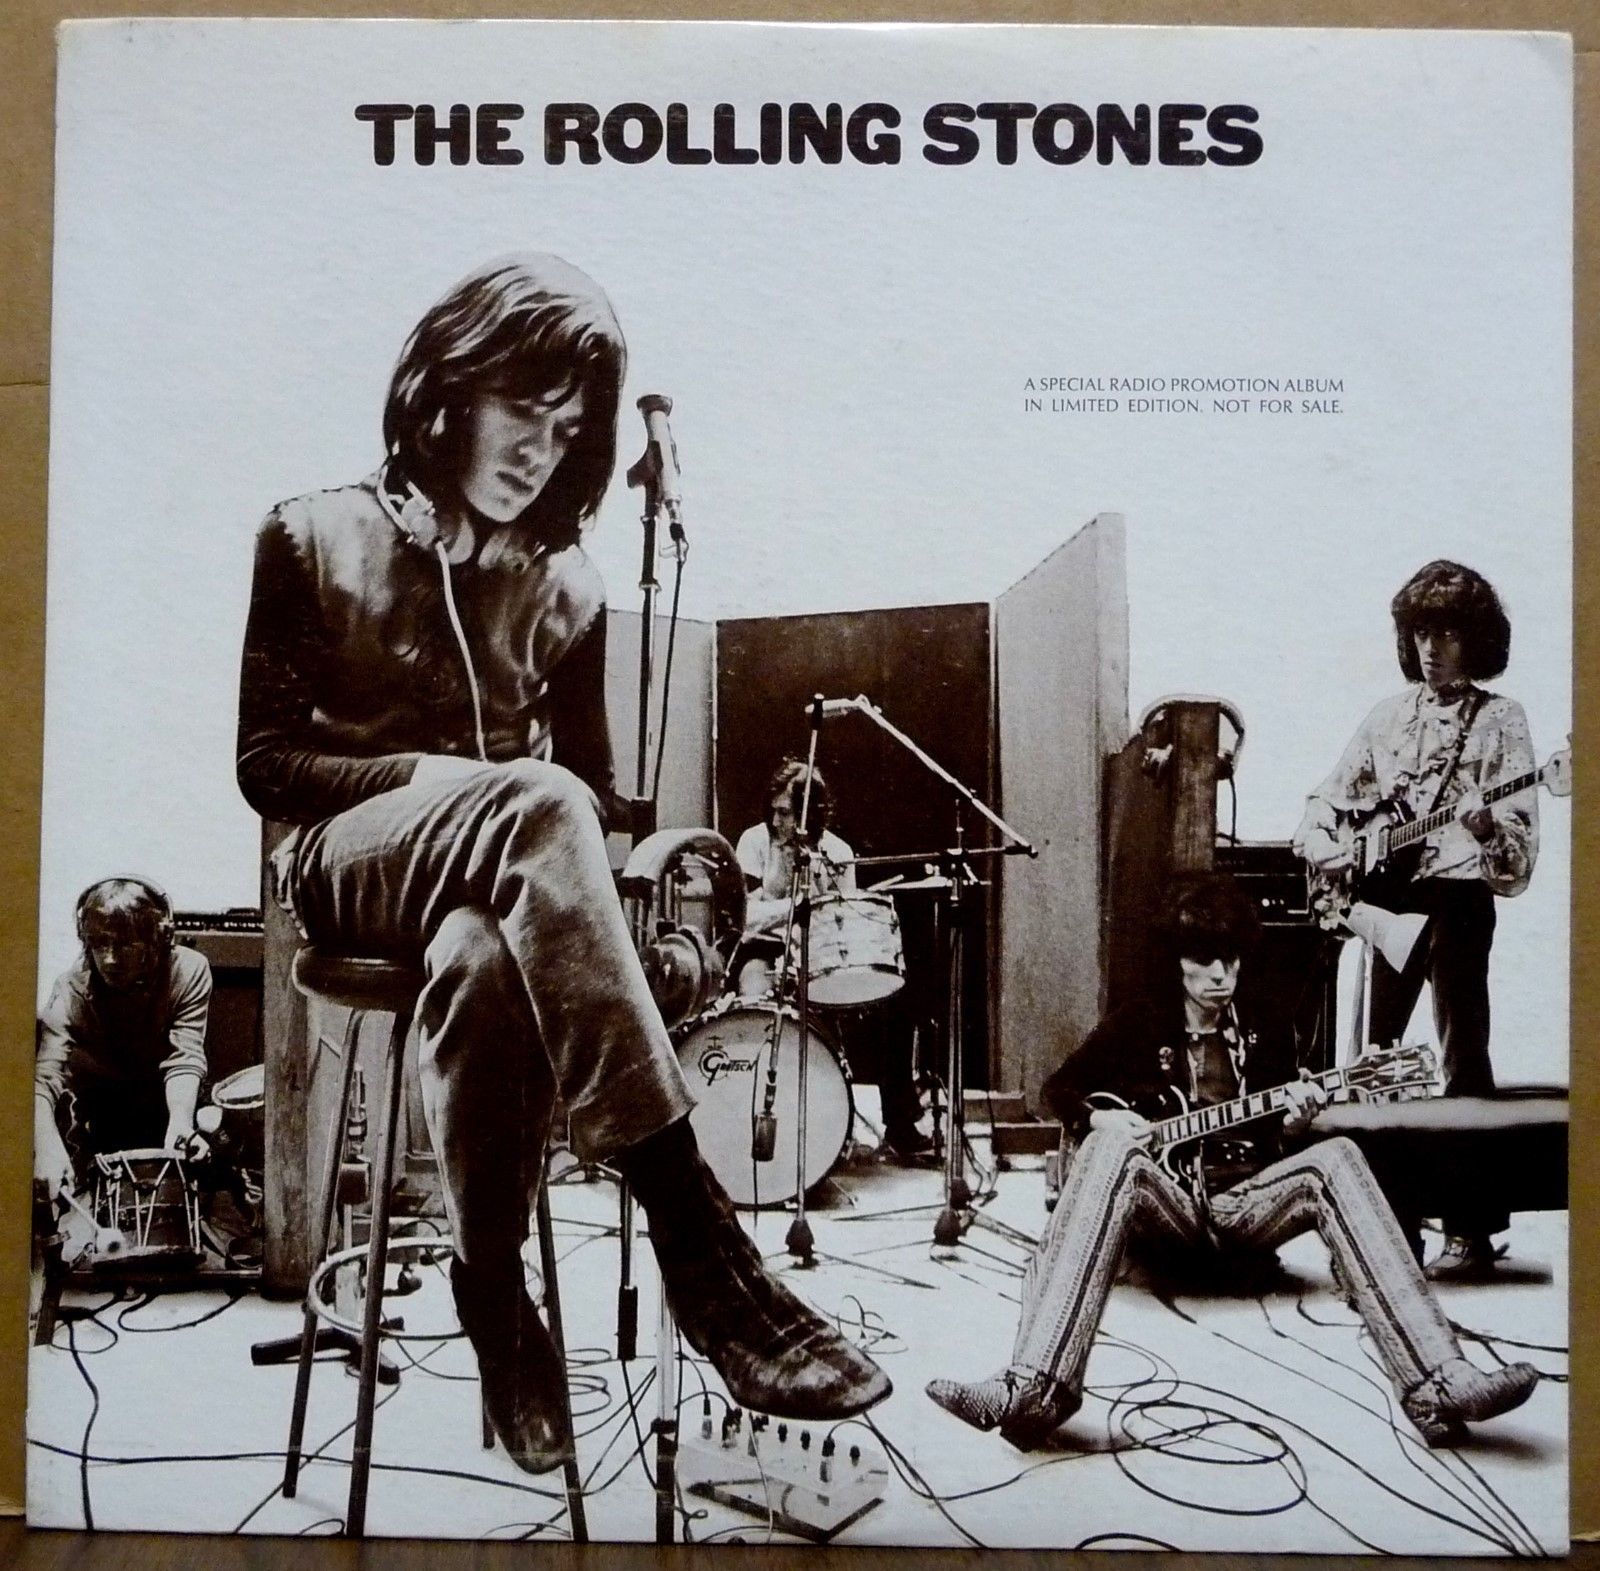 popsike.com - ROLLING STONES Promotional Album RSD-1 Rare 1969 LP